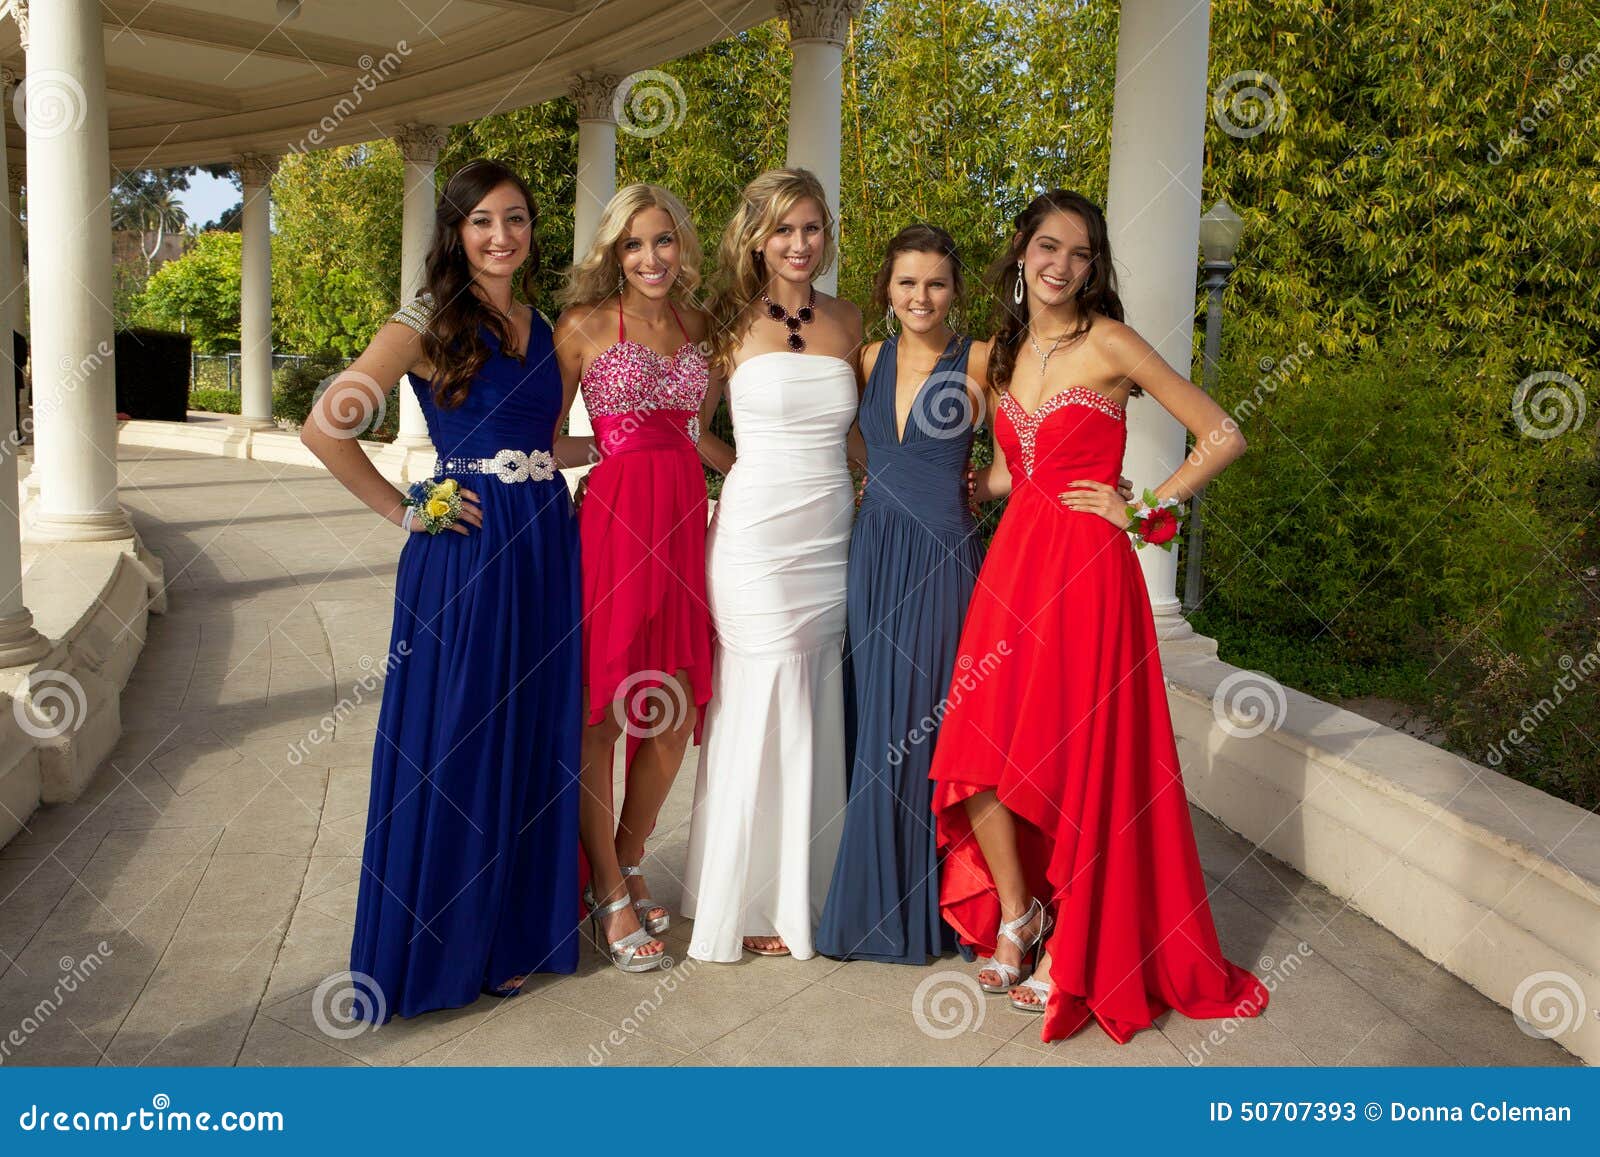 teens in prom dresses